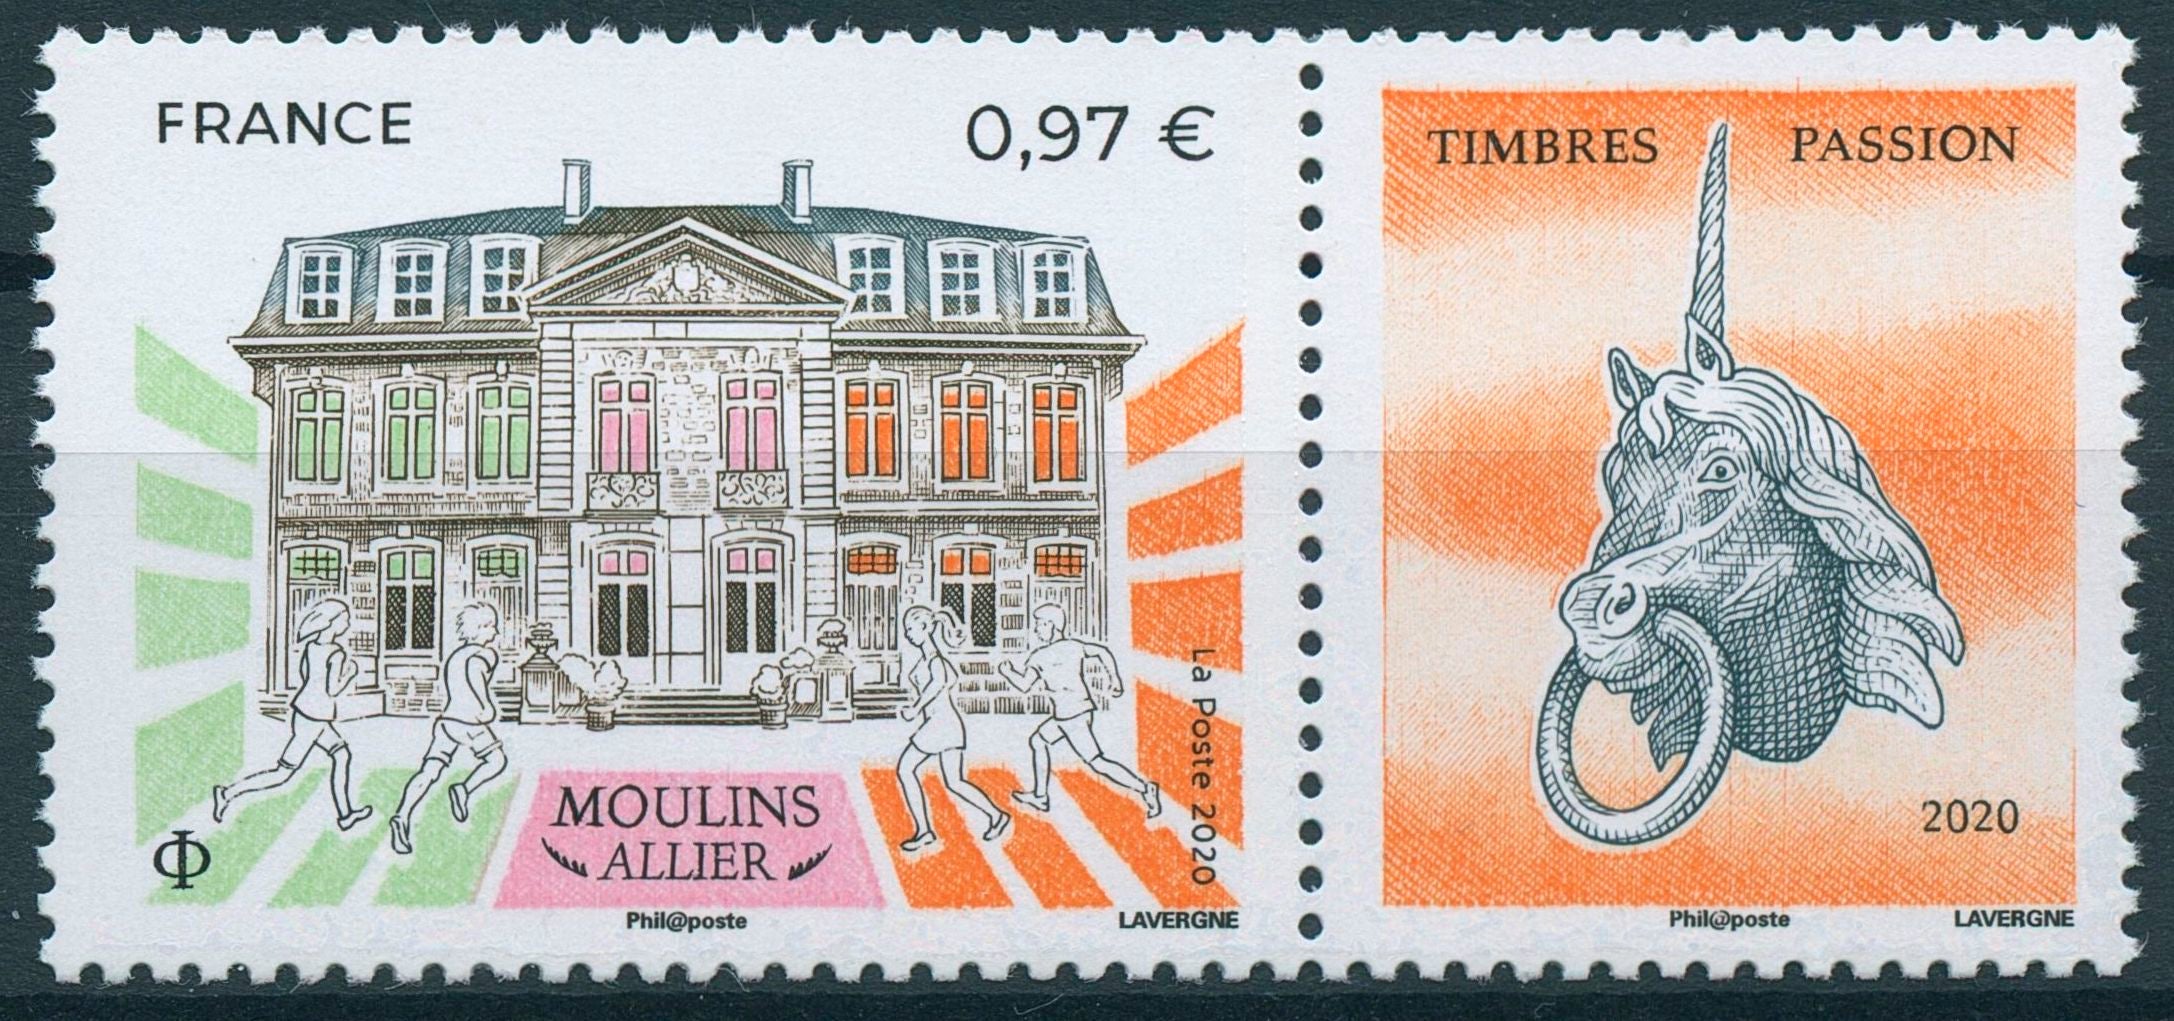 France Architecture Stamps 2020 MNH Moulins Allier Passion Philately 1v Set